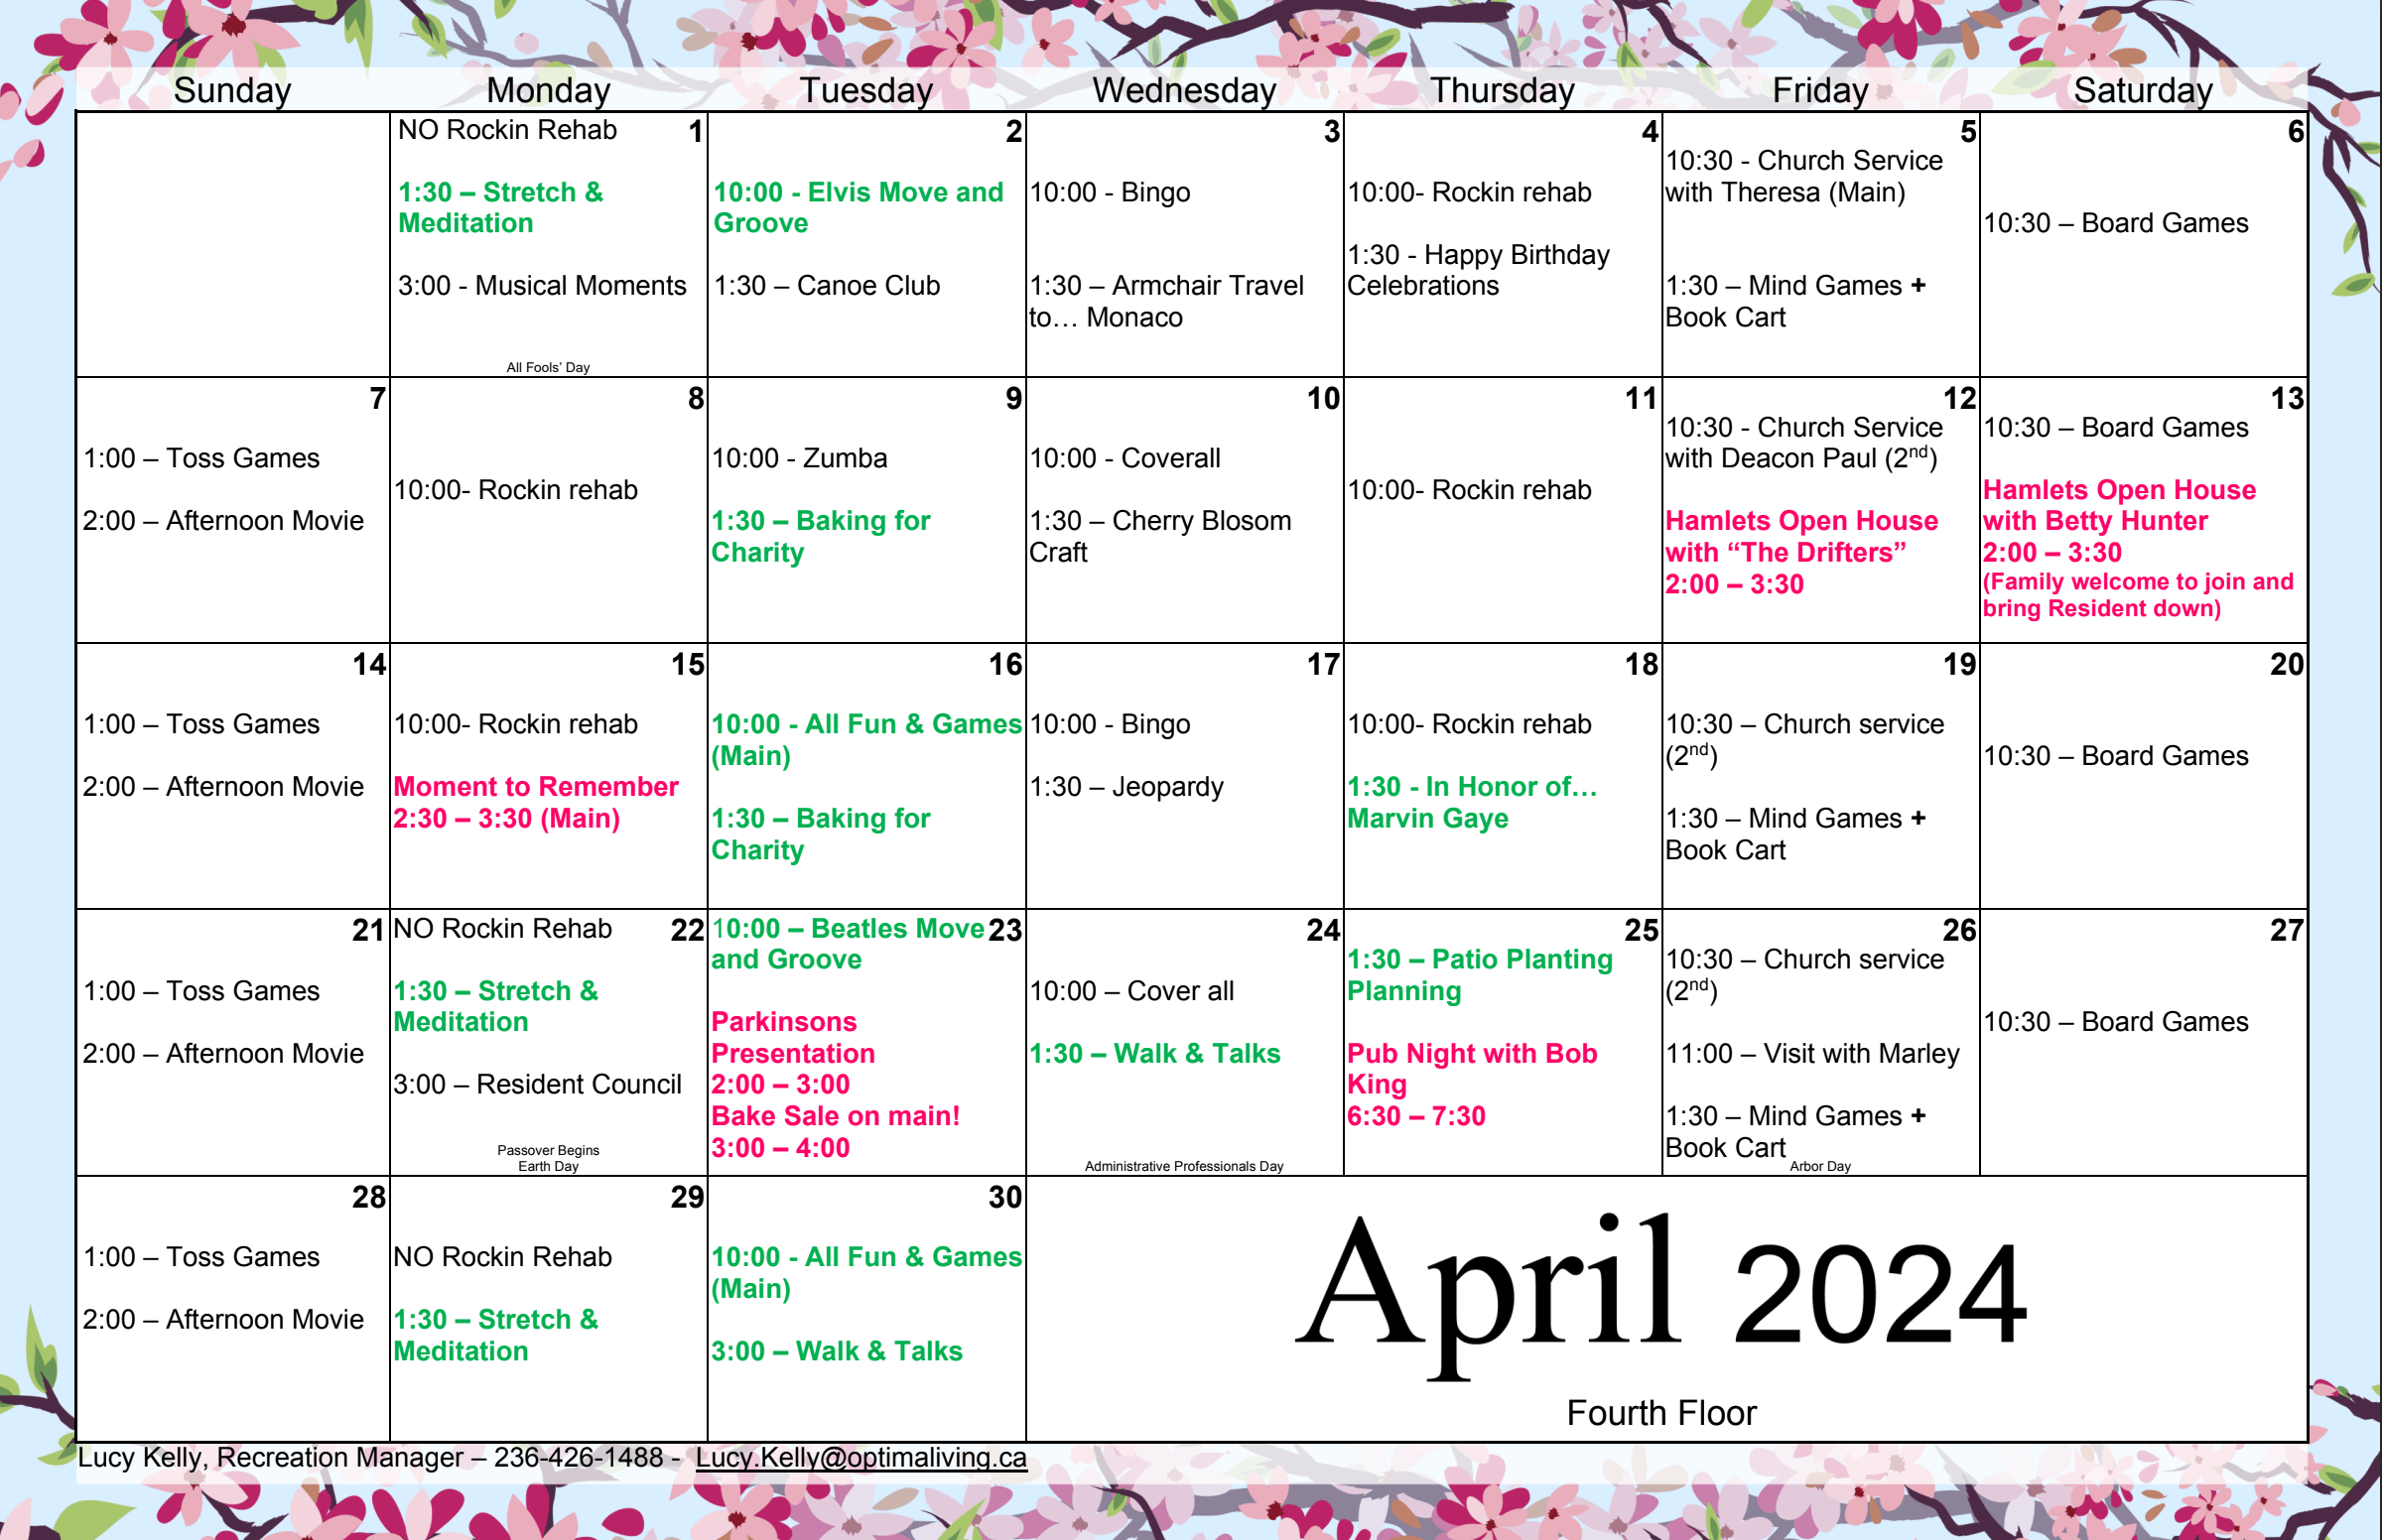 The Hamlets at Vernon April 2024 Fourth Floor event calendar